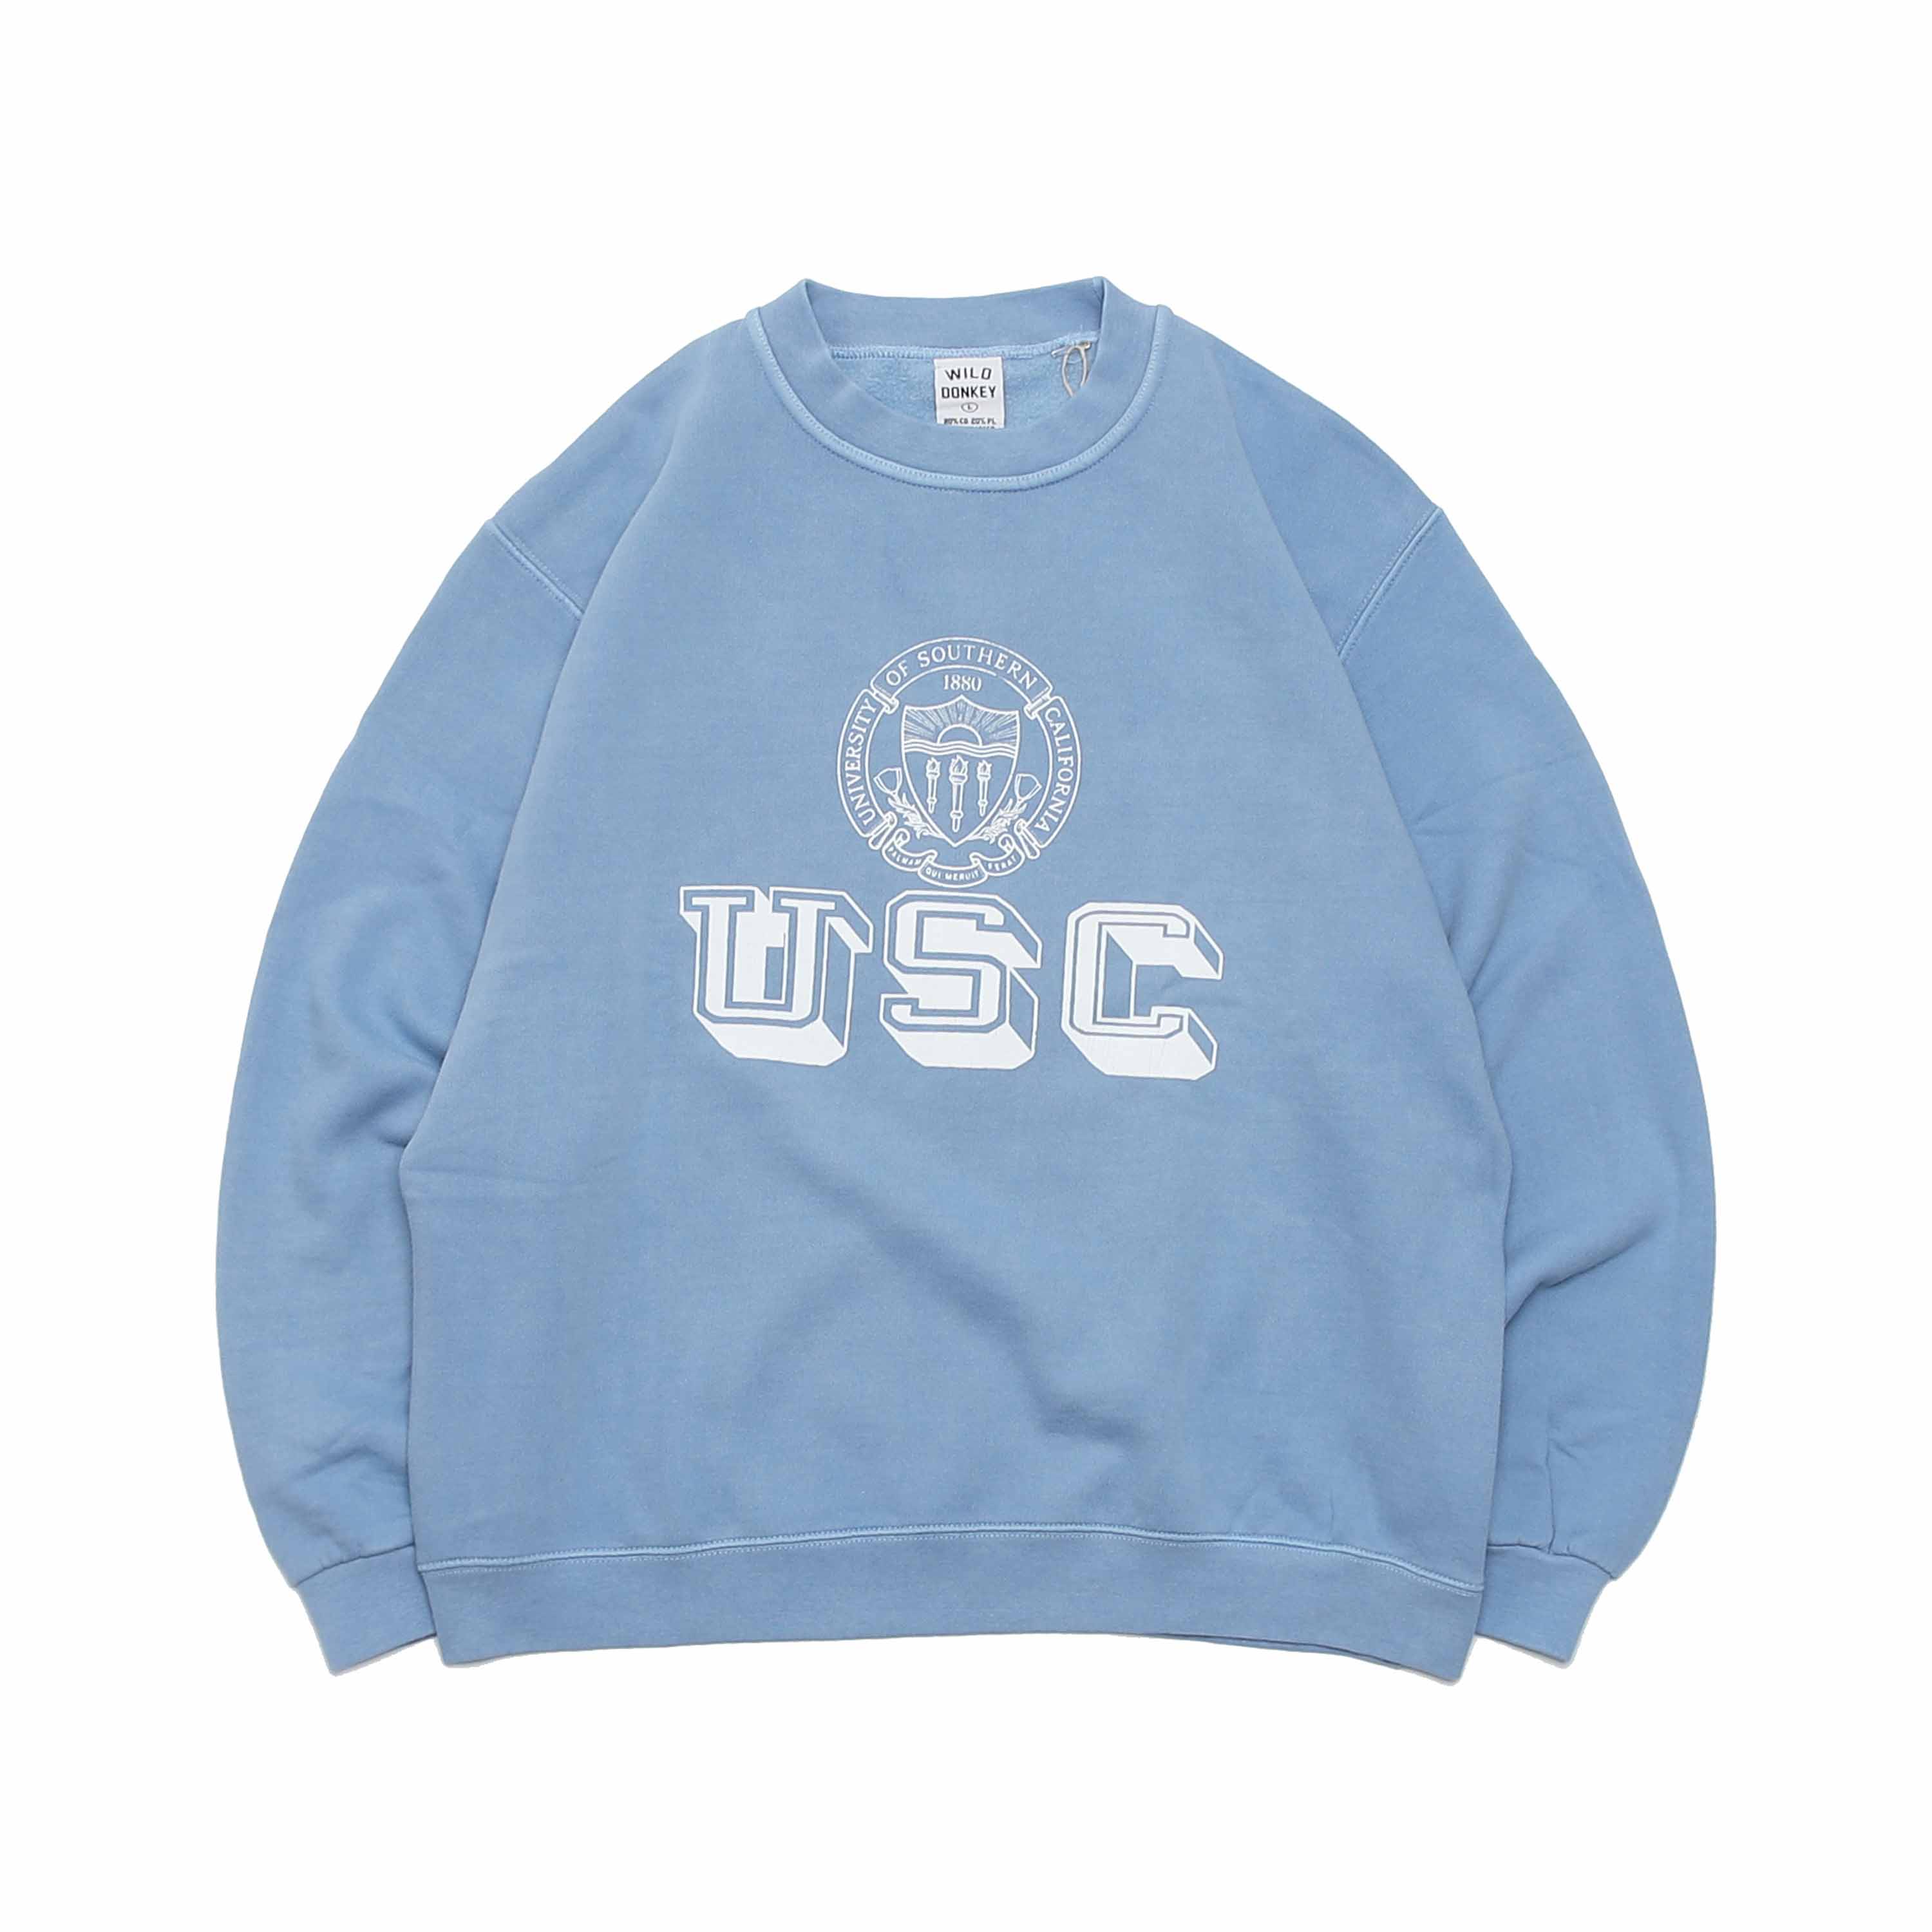 FG-USC SWEAT - SKY BLUE